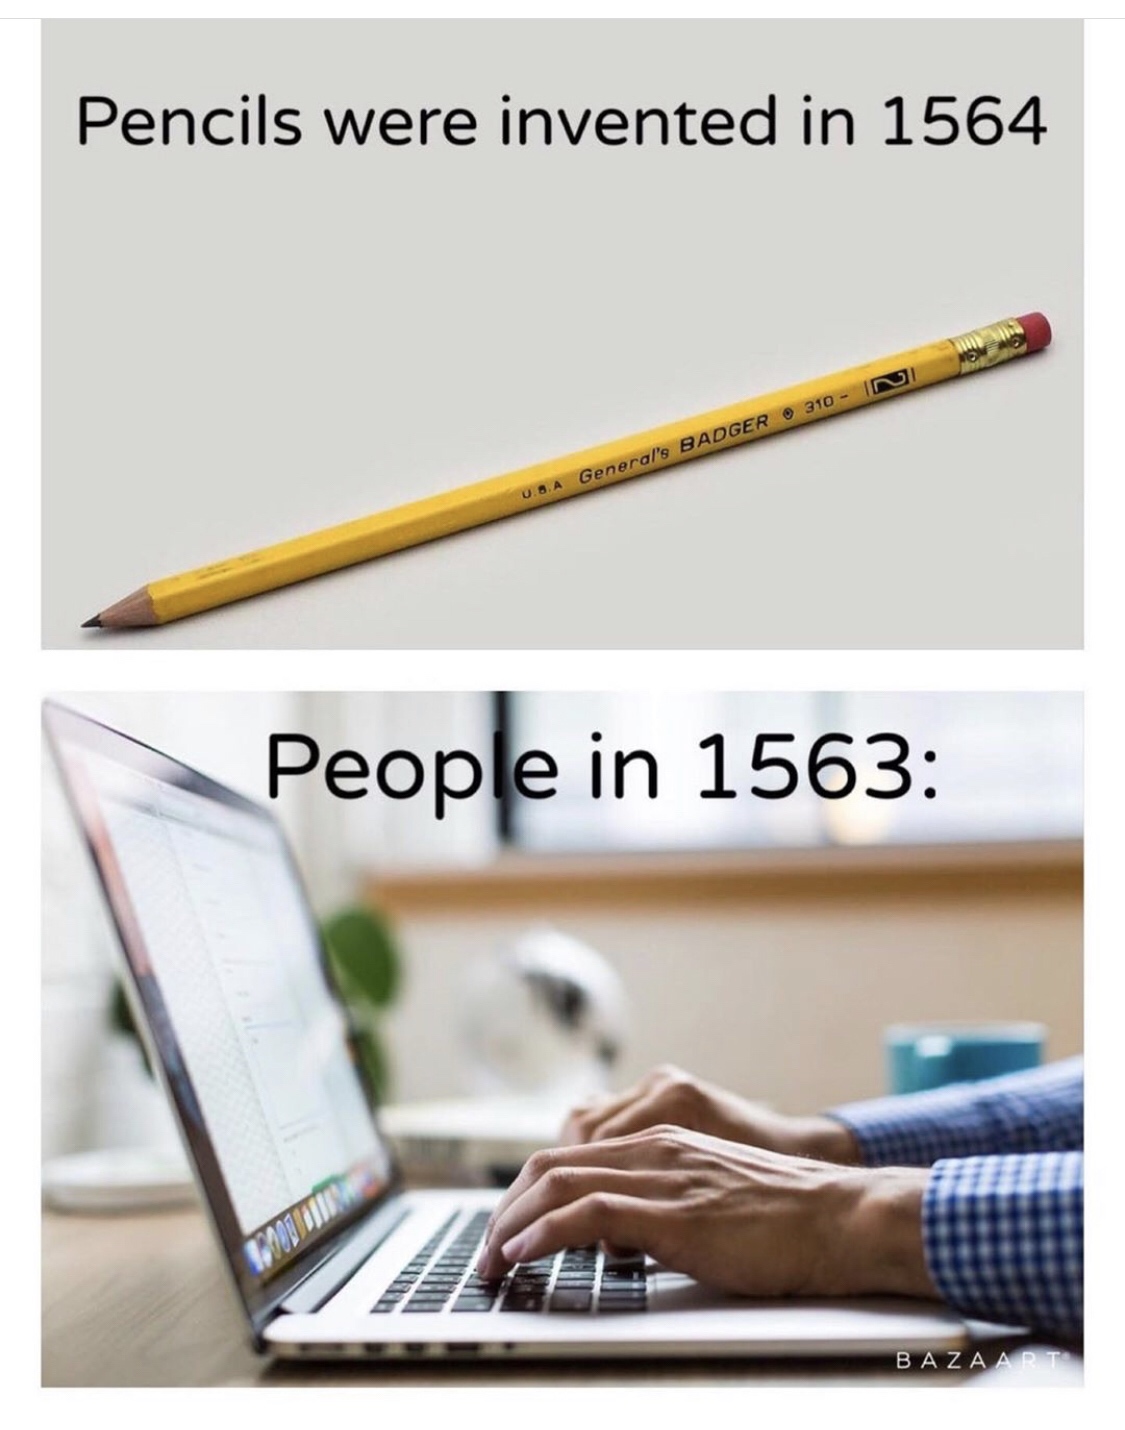 Internet meme - Pencils were invented in 1564 310 Ini Usa General's Badger People in 1563 Bazaart